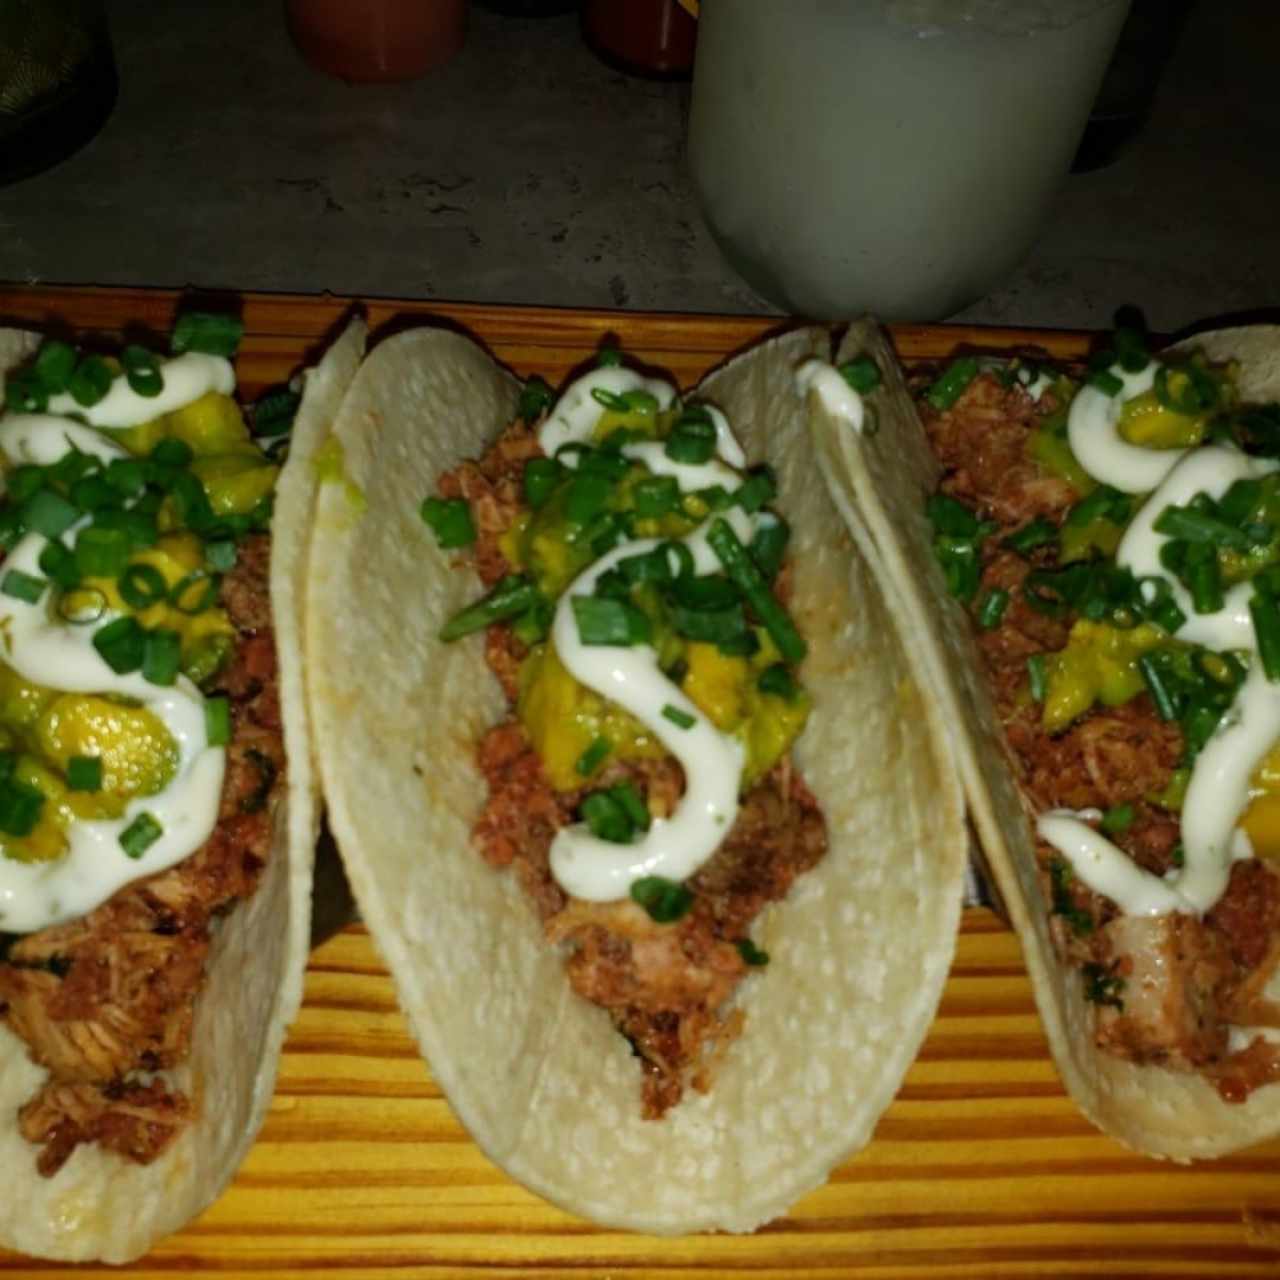 Tacos Cochinita pibil